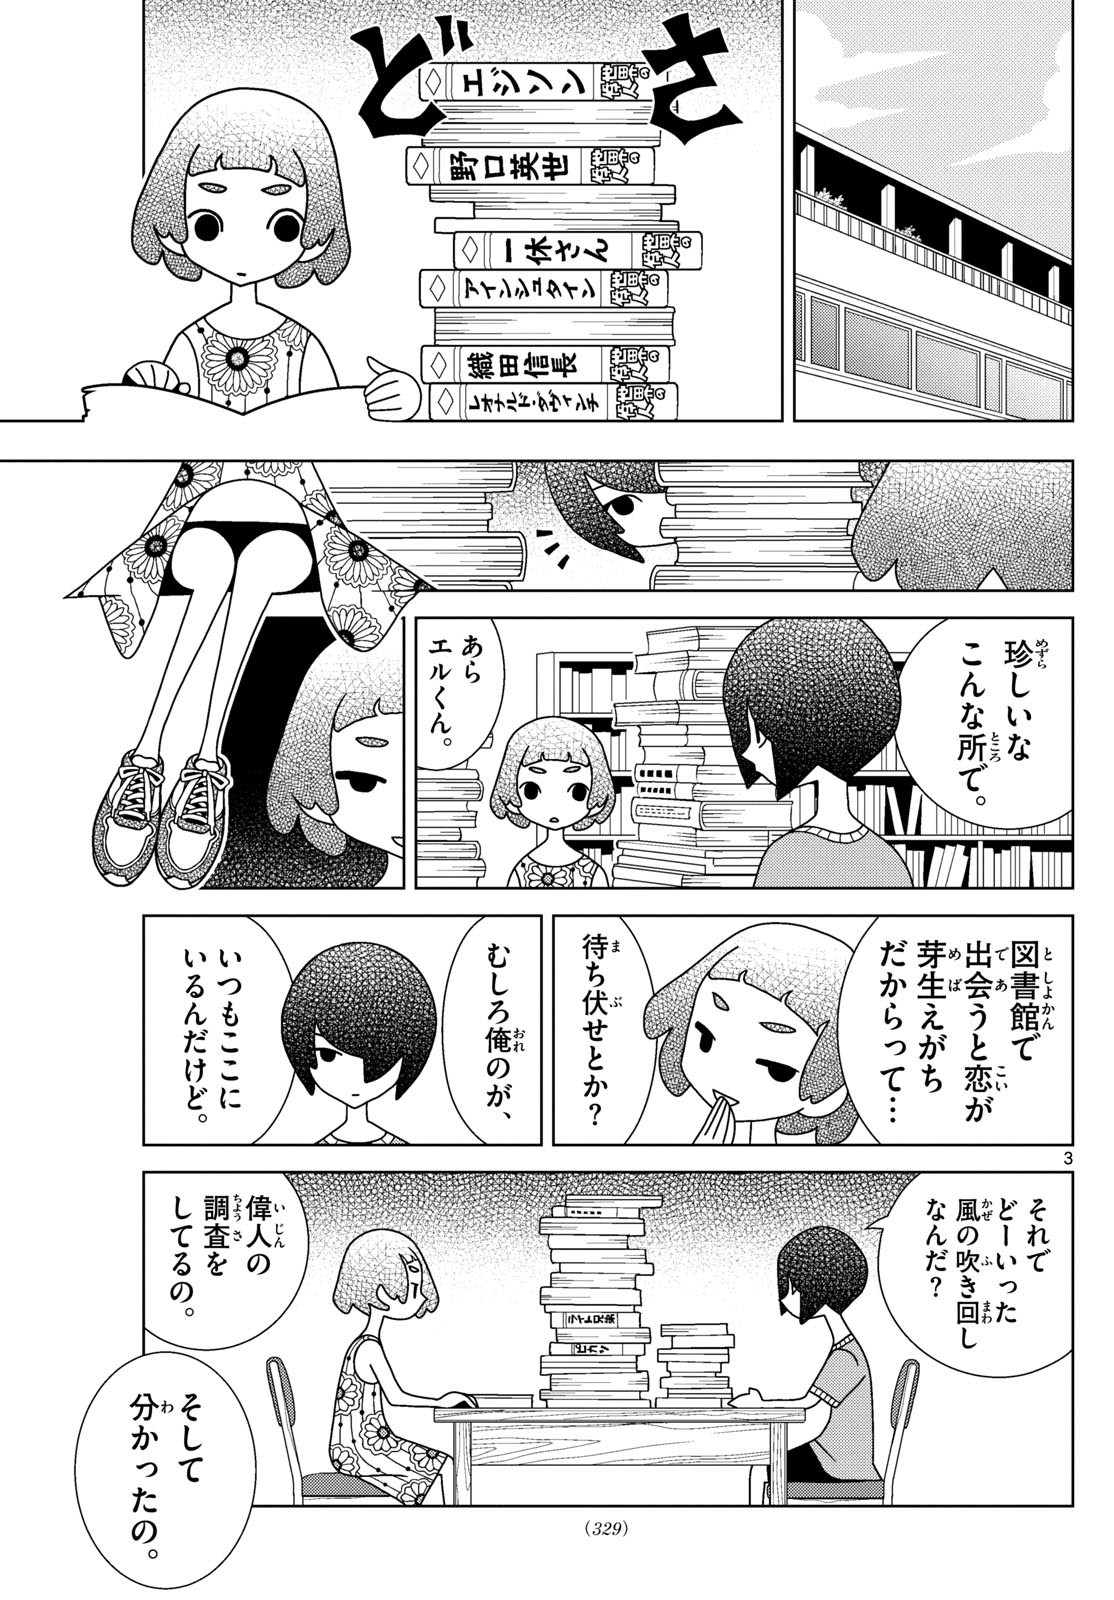 Shibuya Near Family - Chapter 101 - Page 3